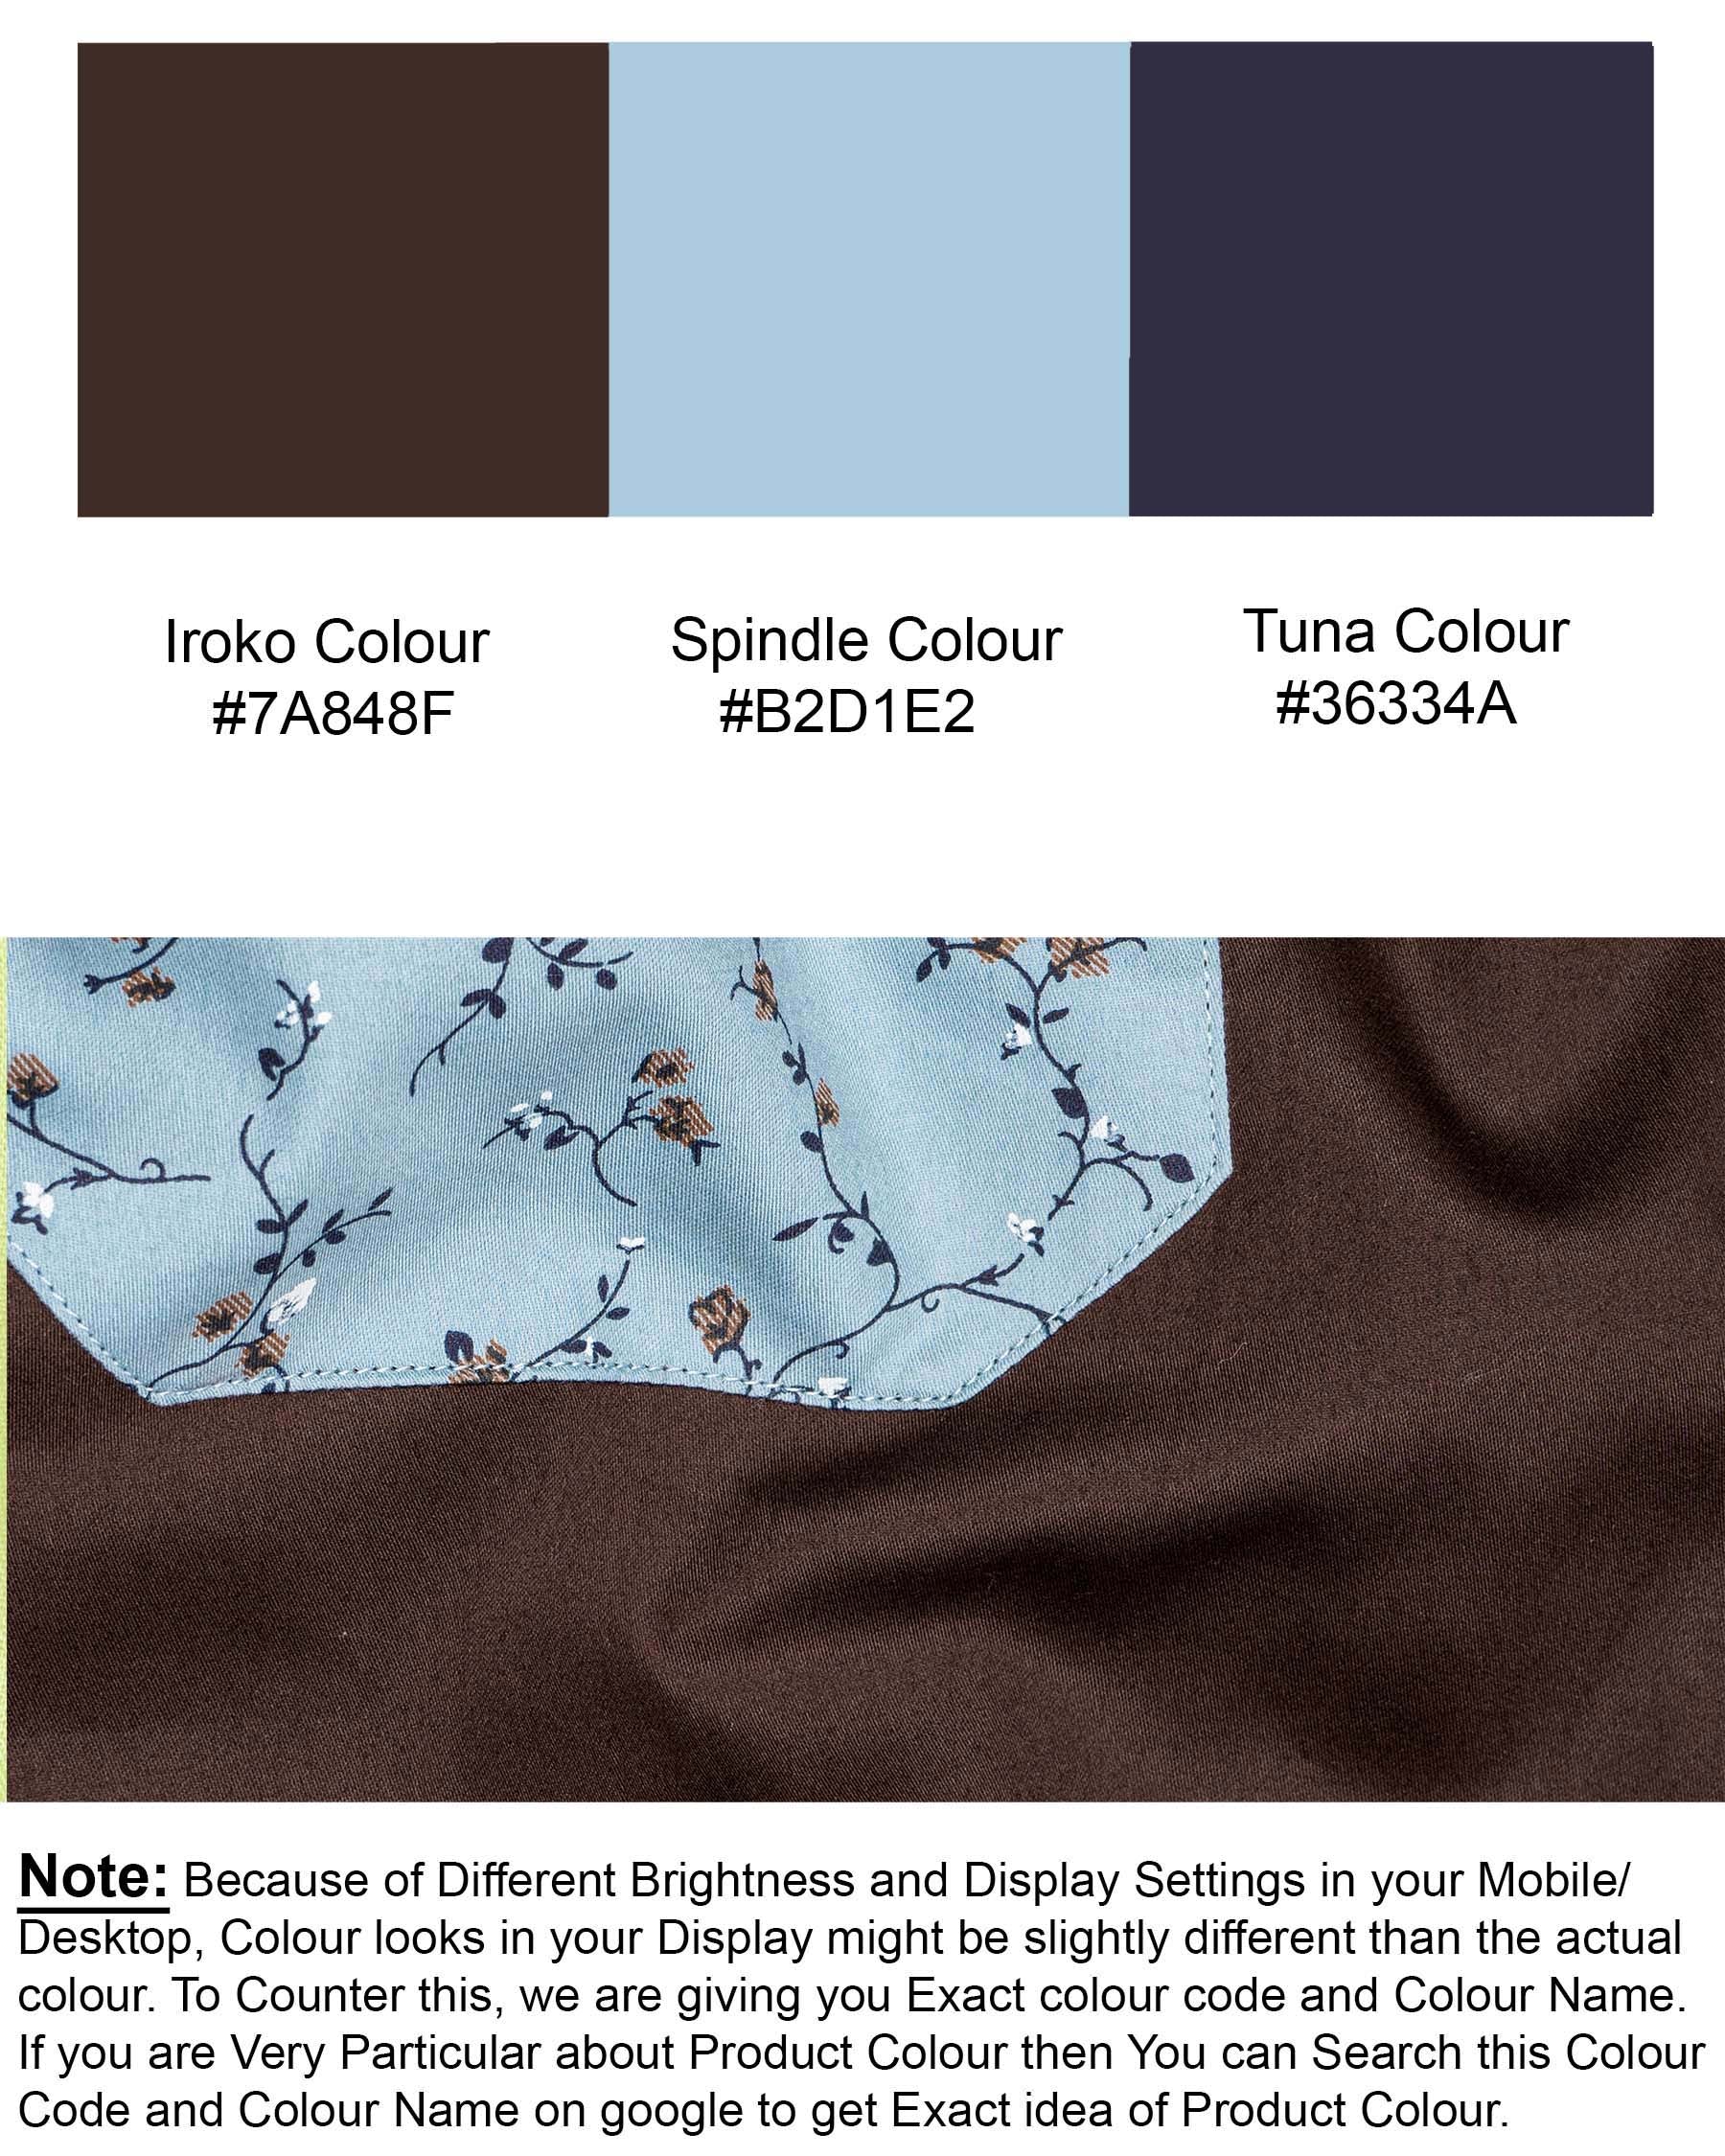 Iroko Brown with Spindle Blue Floral Printed Super Soft Premium Cotton Designer Shirt 6940-P38-38,6940-P38-38,6940-P38-39,6940-P38-39,6940-P38-40,6940-P38-40,6940-P38-42,6940-P38-42,6940-P38-44,6940-P38-44,6940-P38-46,6940-P38-46,6940-P38-48,6940-P38-48,6940-P38-50,6940-P38-50,6940-P38-52,6940-P38-52